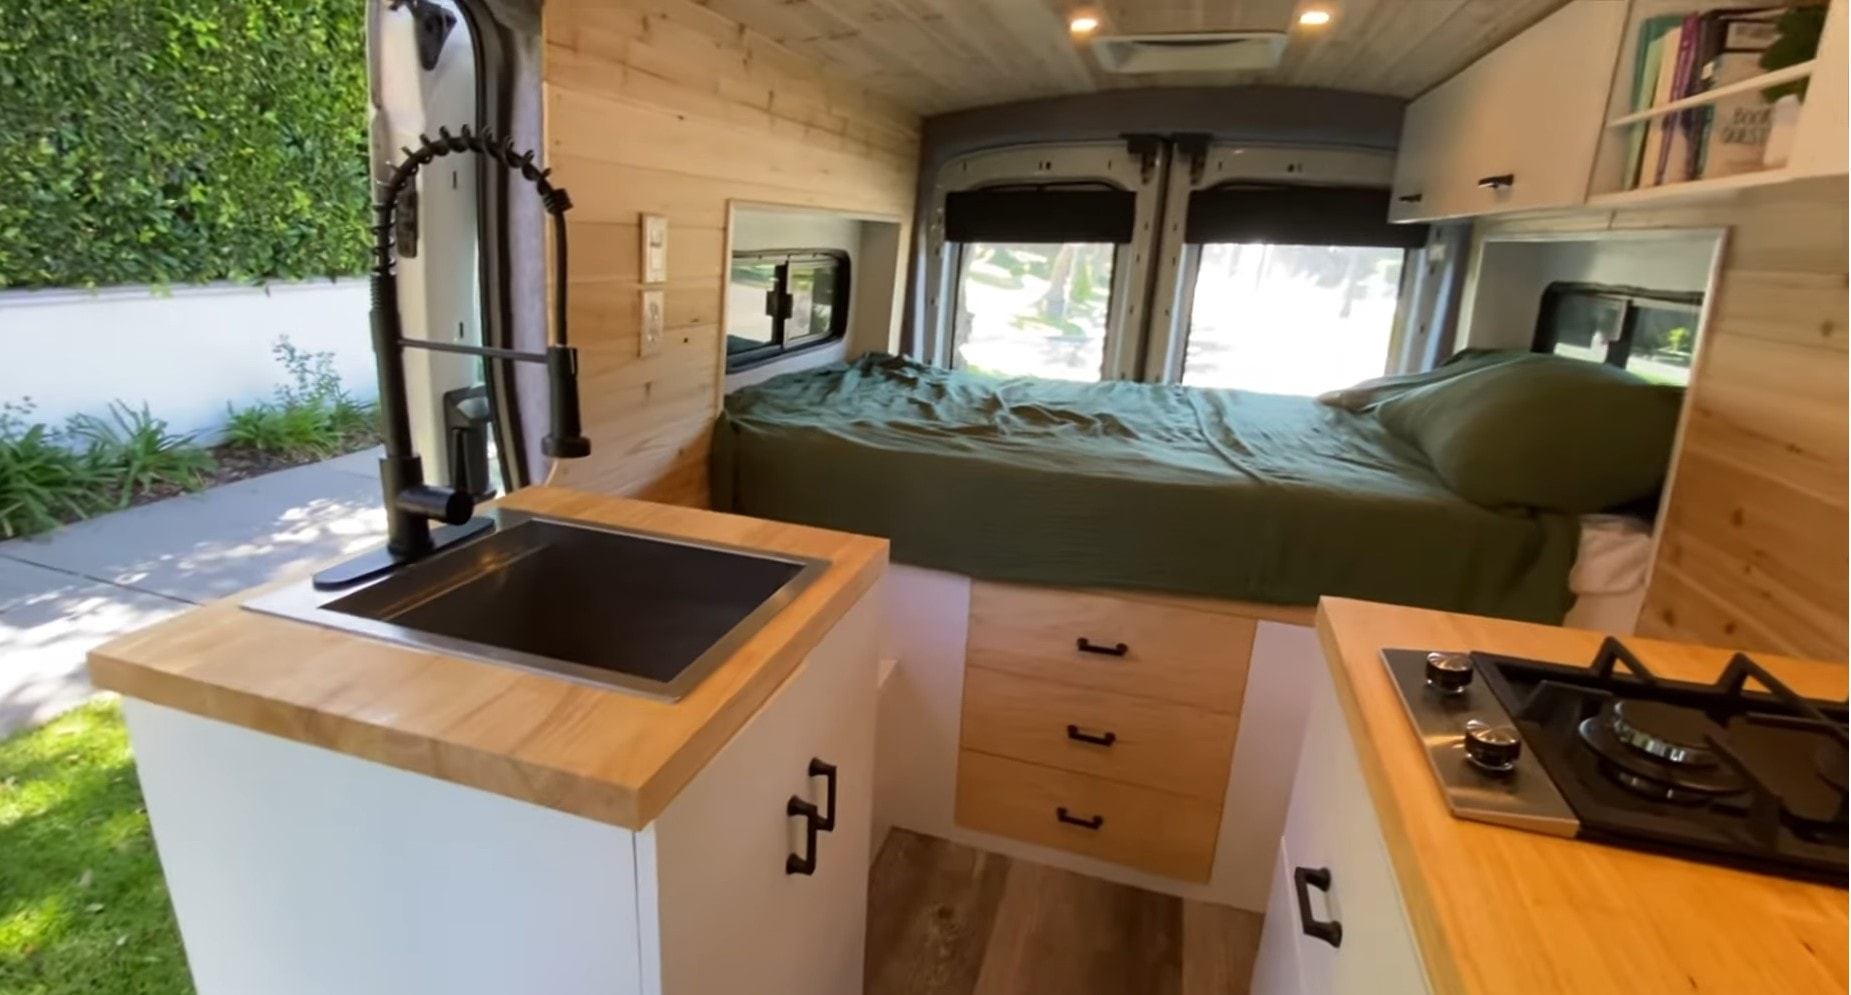 Фургон Ford Transit 2015 года — минималистское общежитие на колесах для студента